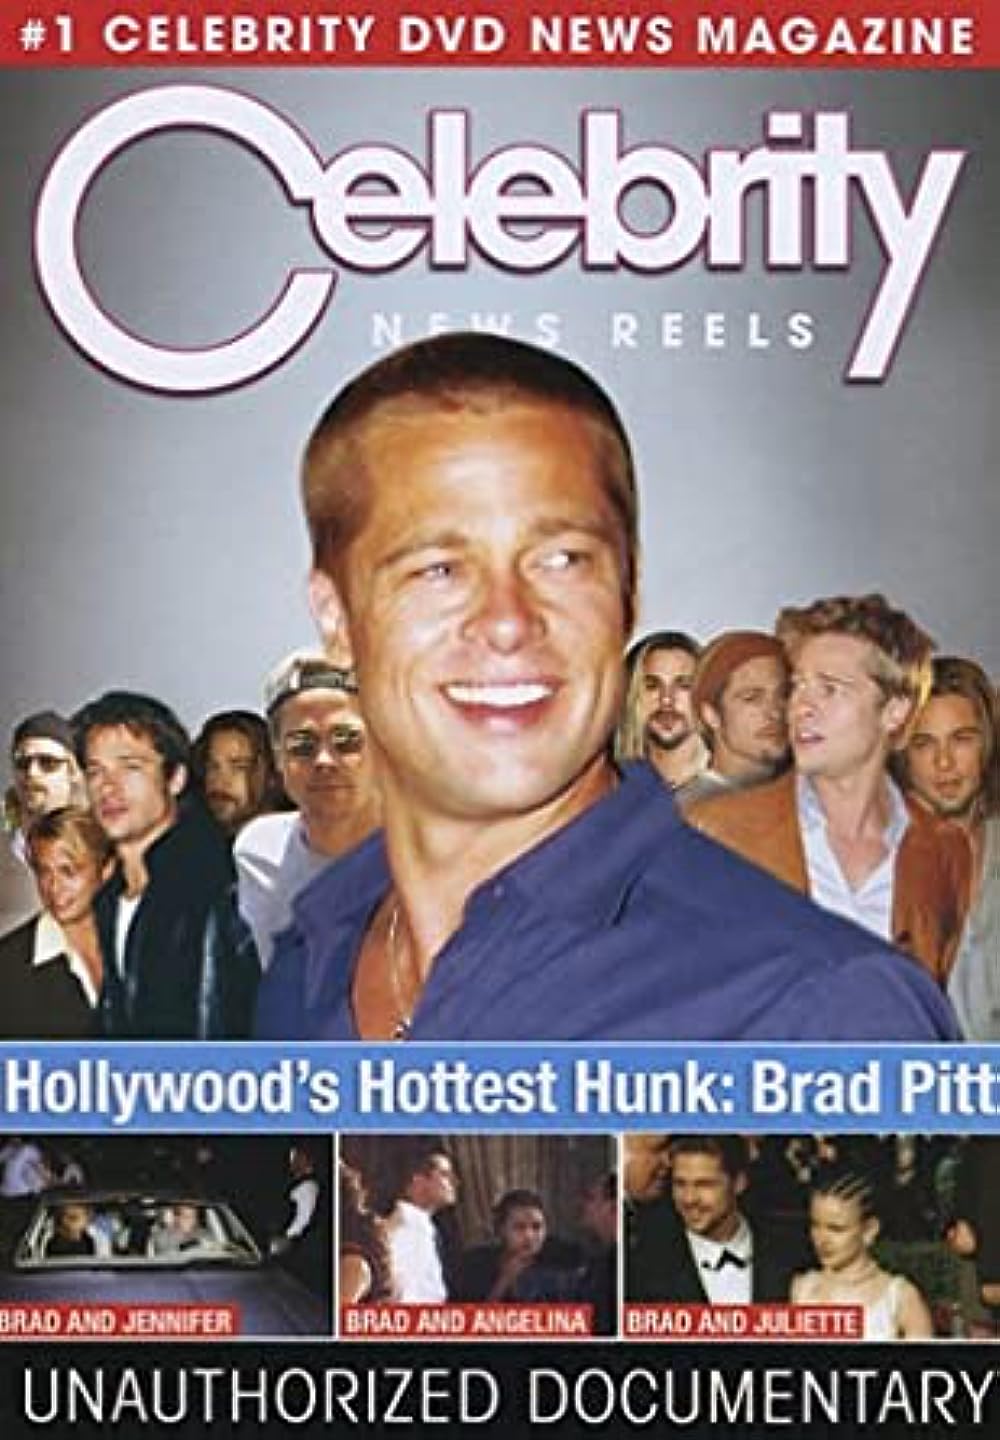 Celebrity News Reels Presents: Hollywood's Hottest Hunk: Brad Pitt